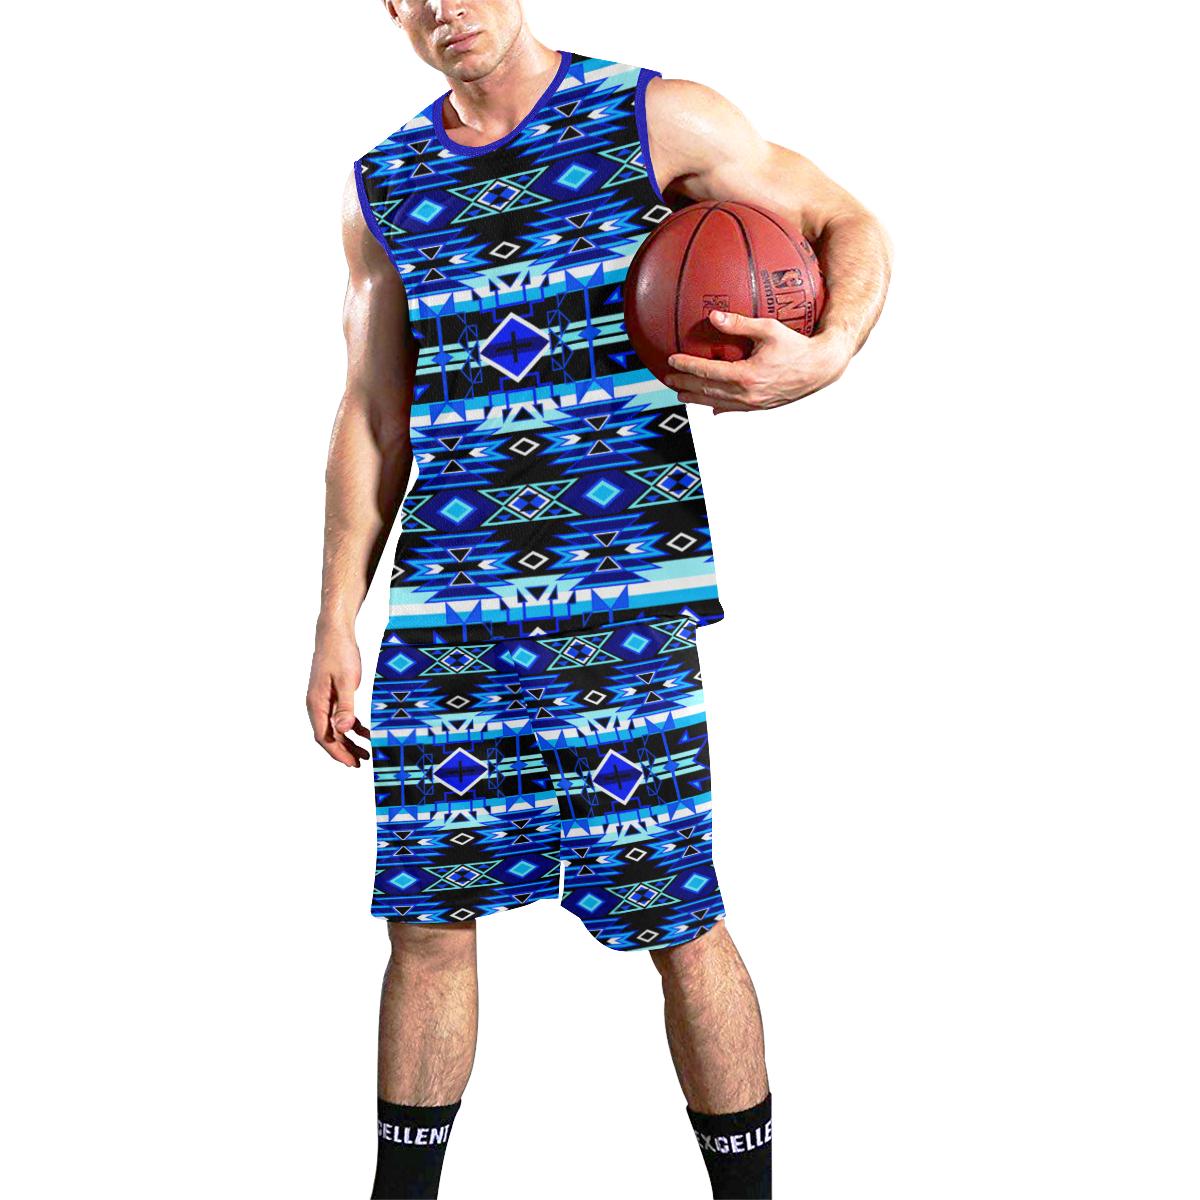 Force of Nature Winter Night All Over Print Basketball Uniform Basketball Uniform e-joyer 